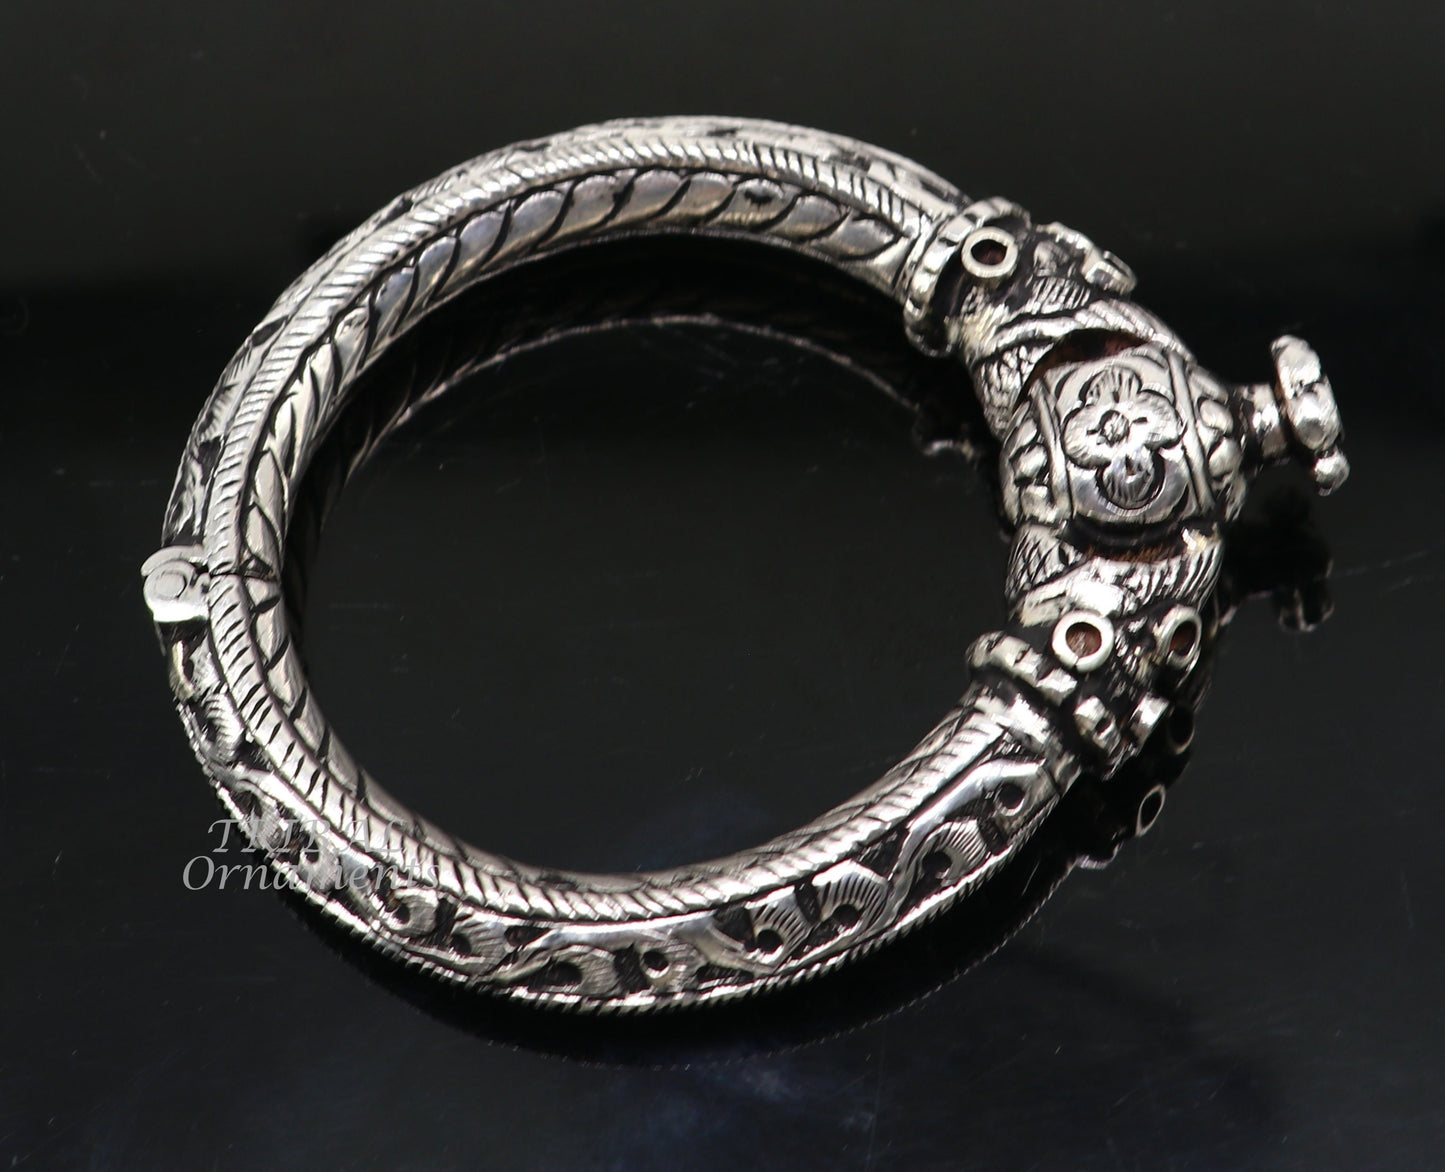 925 sterling silver handmade chitai work crocodile face fabulous handcrafted work vintage bangle bracelet kada, bridesmaid gifting nsk543 - TRIBAL ORNAMENTS